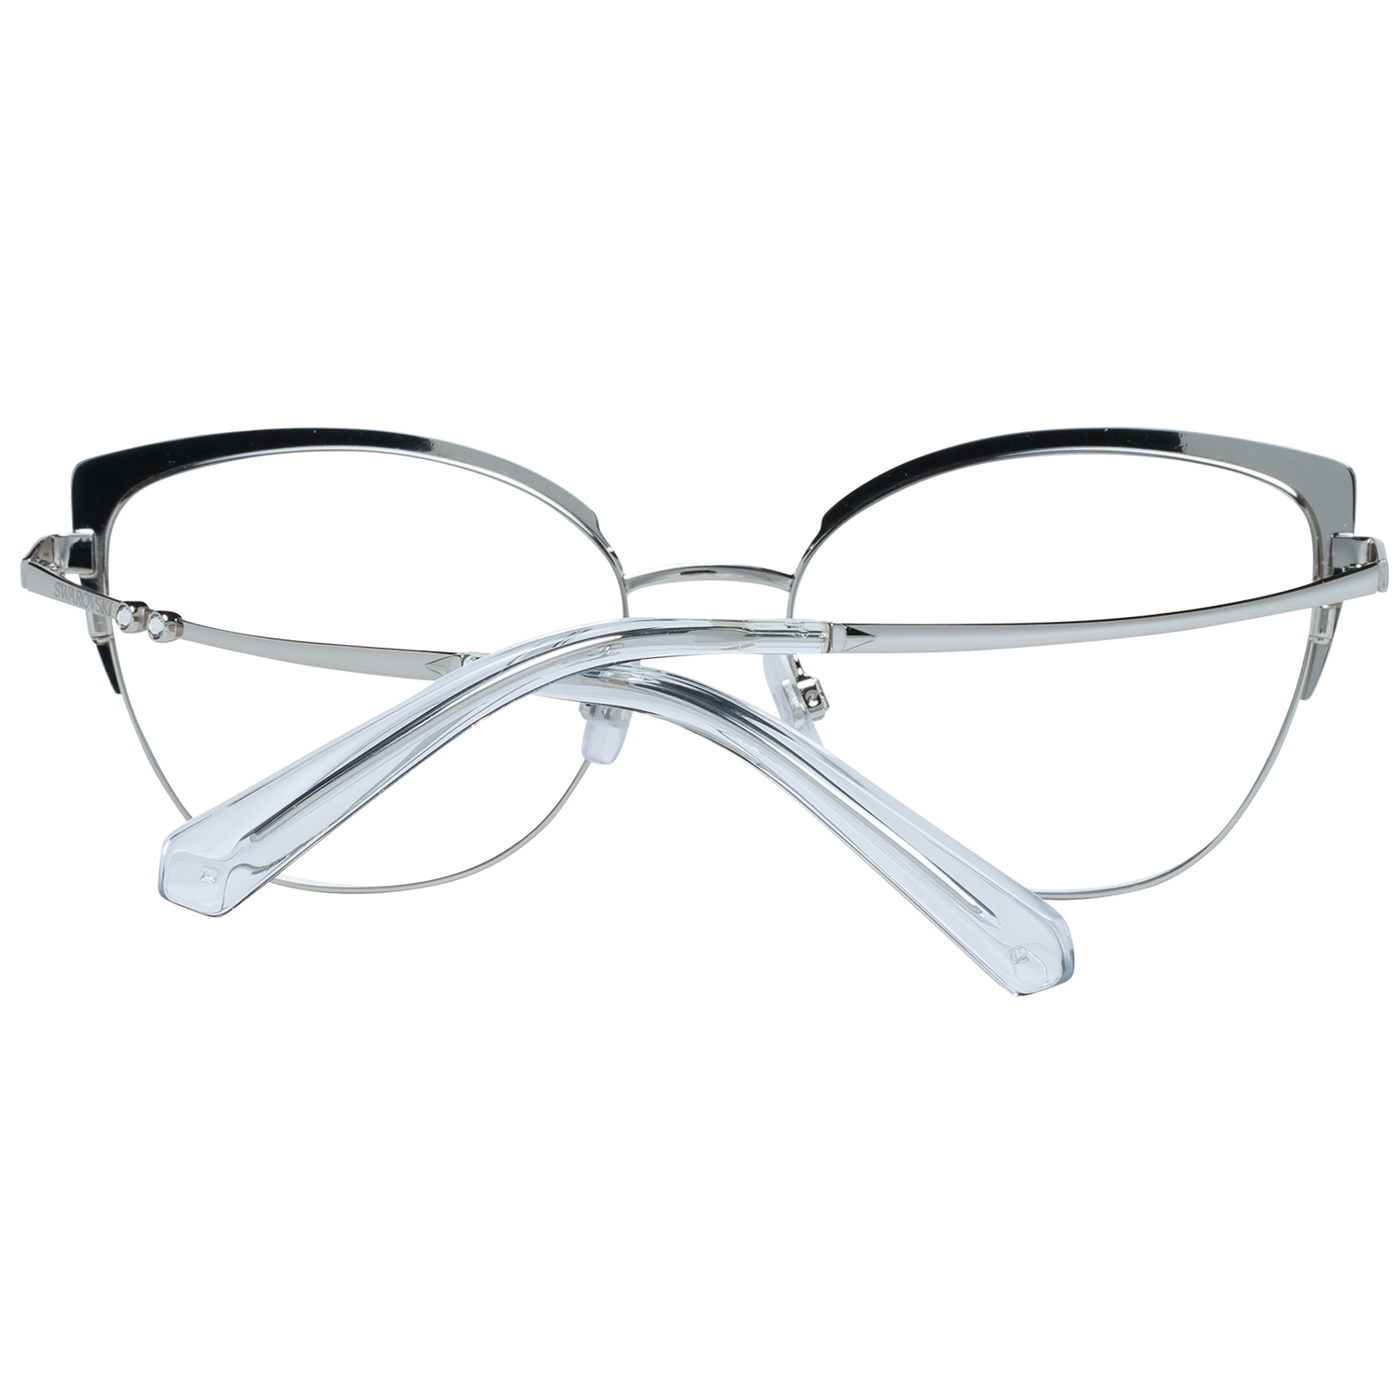 Swarovski Silver Women Optical Frames